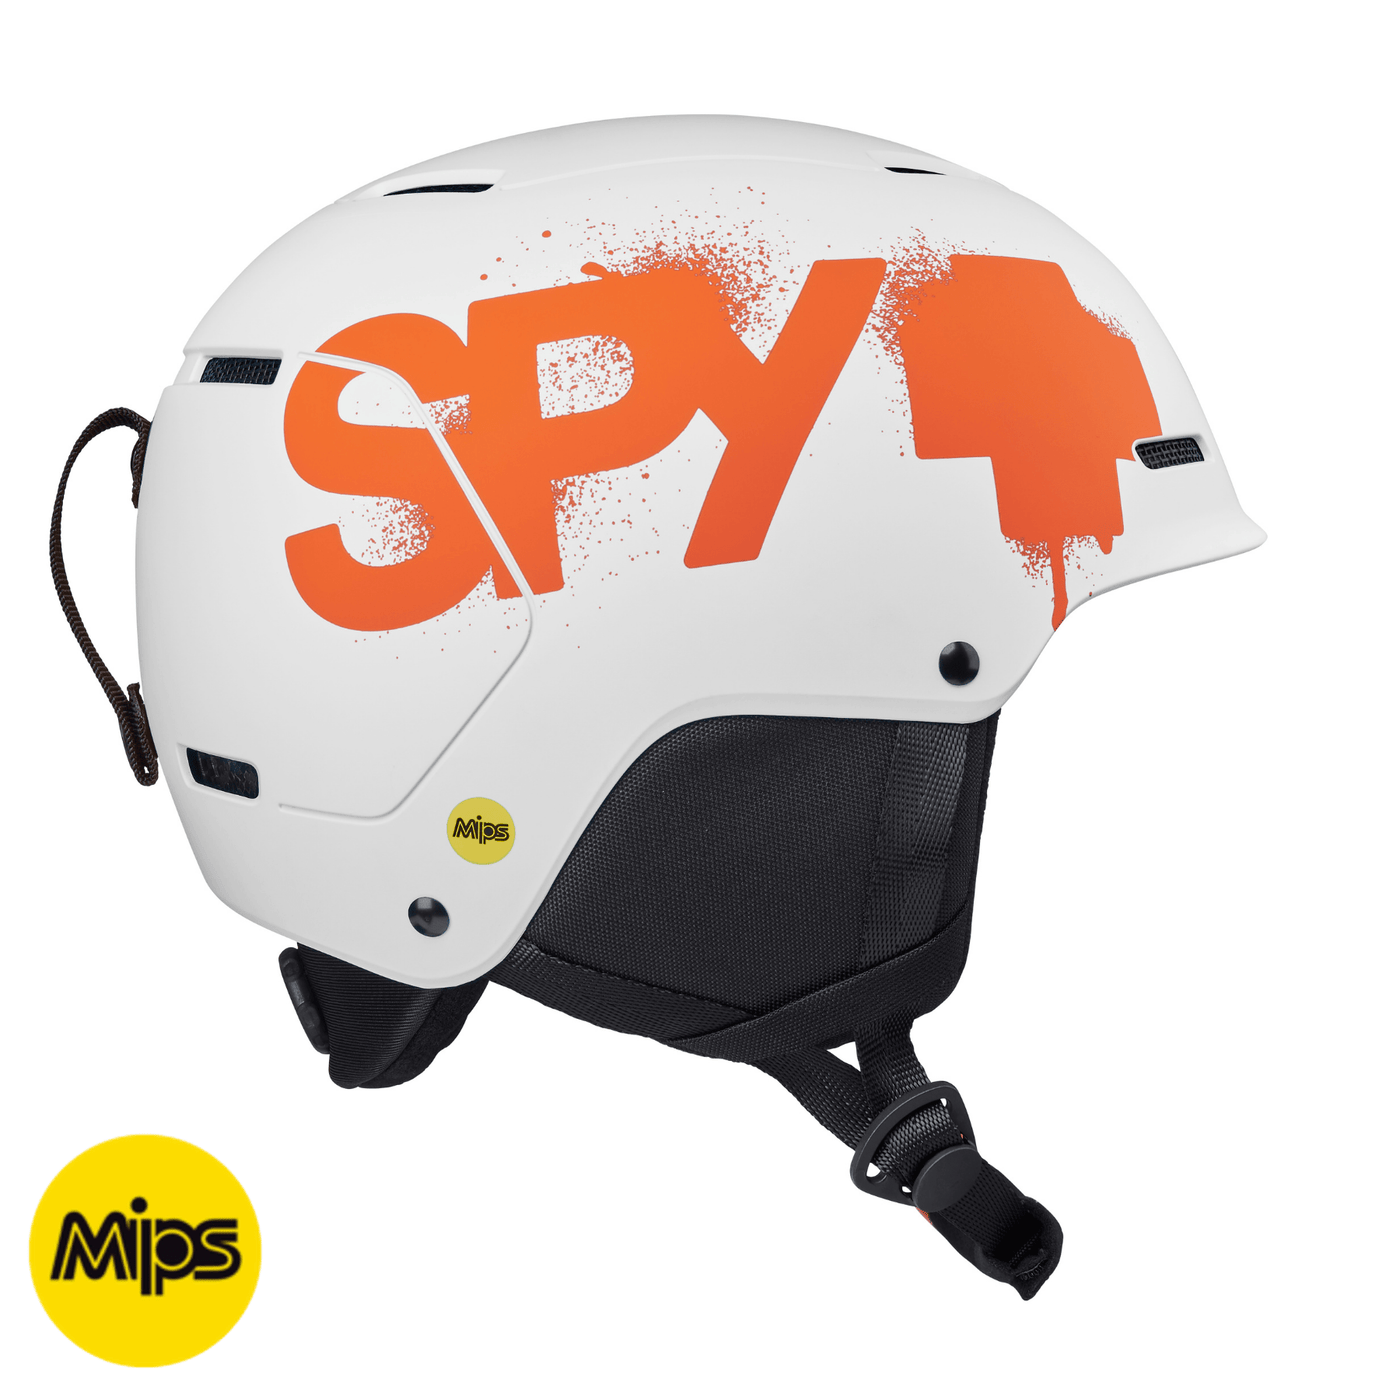 SPY Youth Snow Helmet Lil Astronomic Matte White - Orange Splatter Logo 8Lines Shop - Fast Shipping